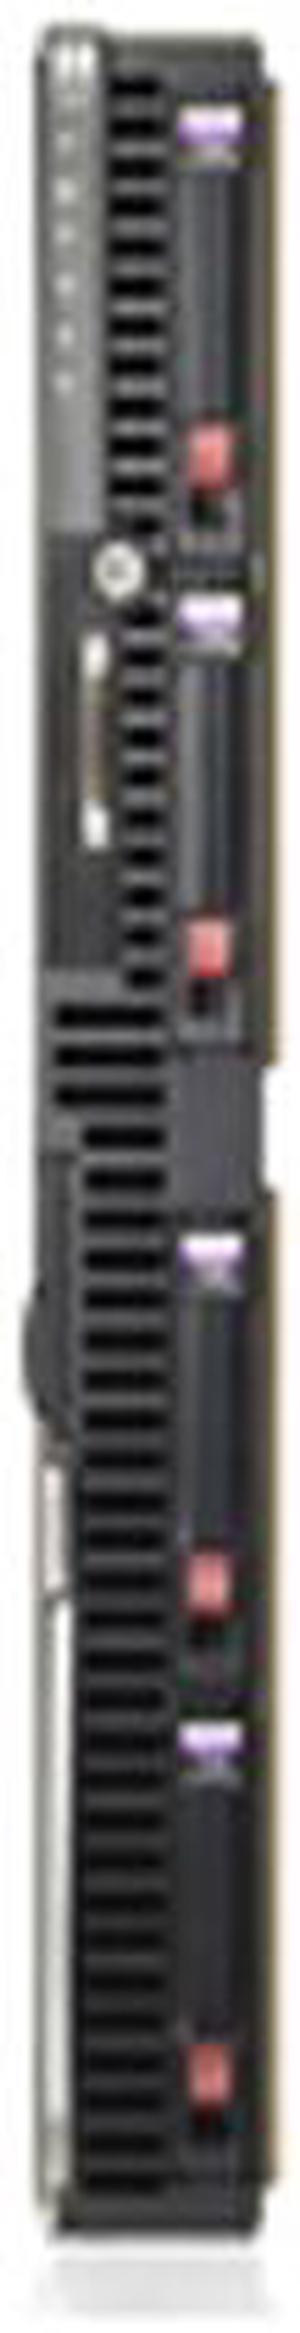 HP ProLiant BL480c Blade Dual  Xeon 5160 3.00 GHz 4 GB DDR2 Server Blade 2 x Dual-core Intel Xeon 5160 (3.00 GHz, 1333 MHz FSB) 4 GB (4 x 1 GB) PC2-5300 Fully Buffered DIMMs running at 667 MHz 416669-